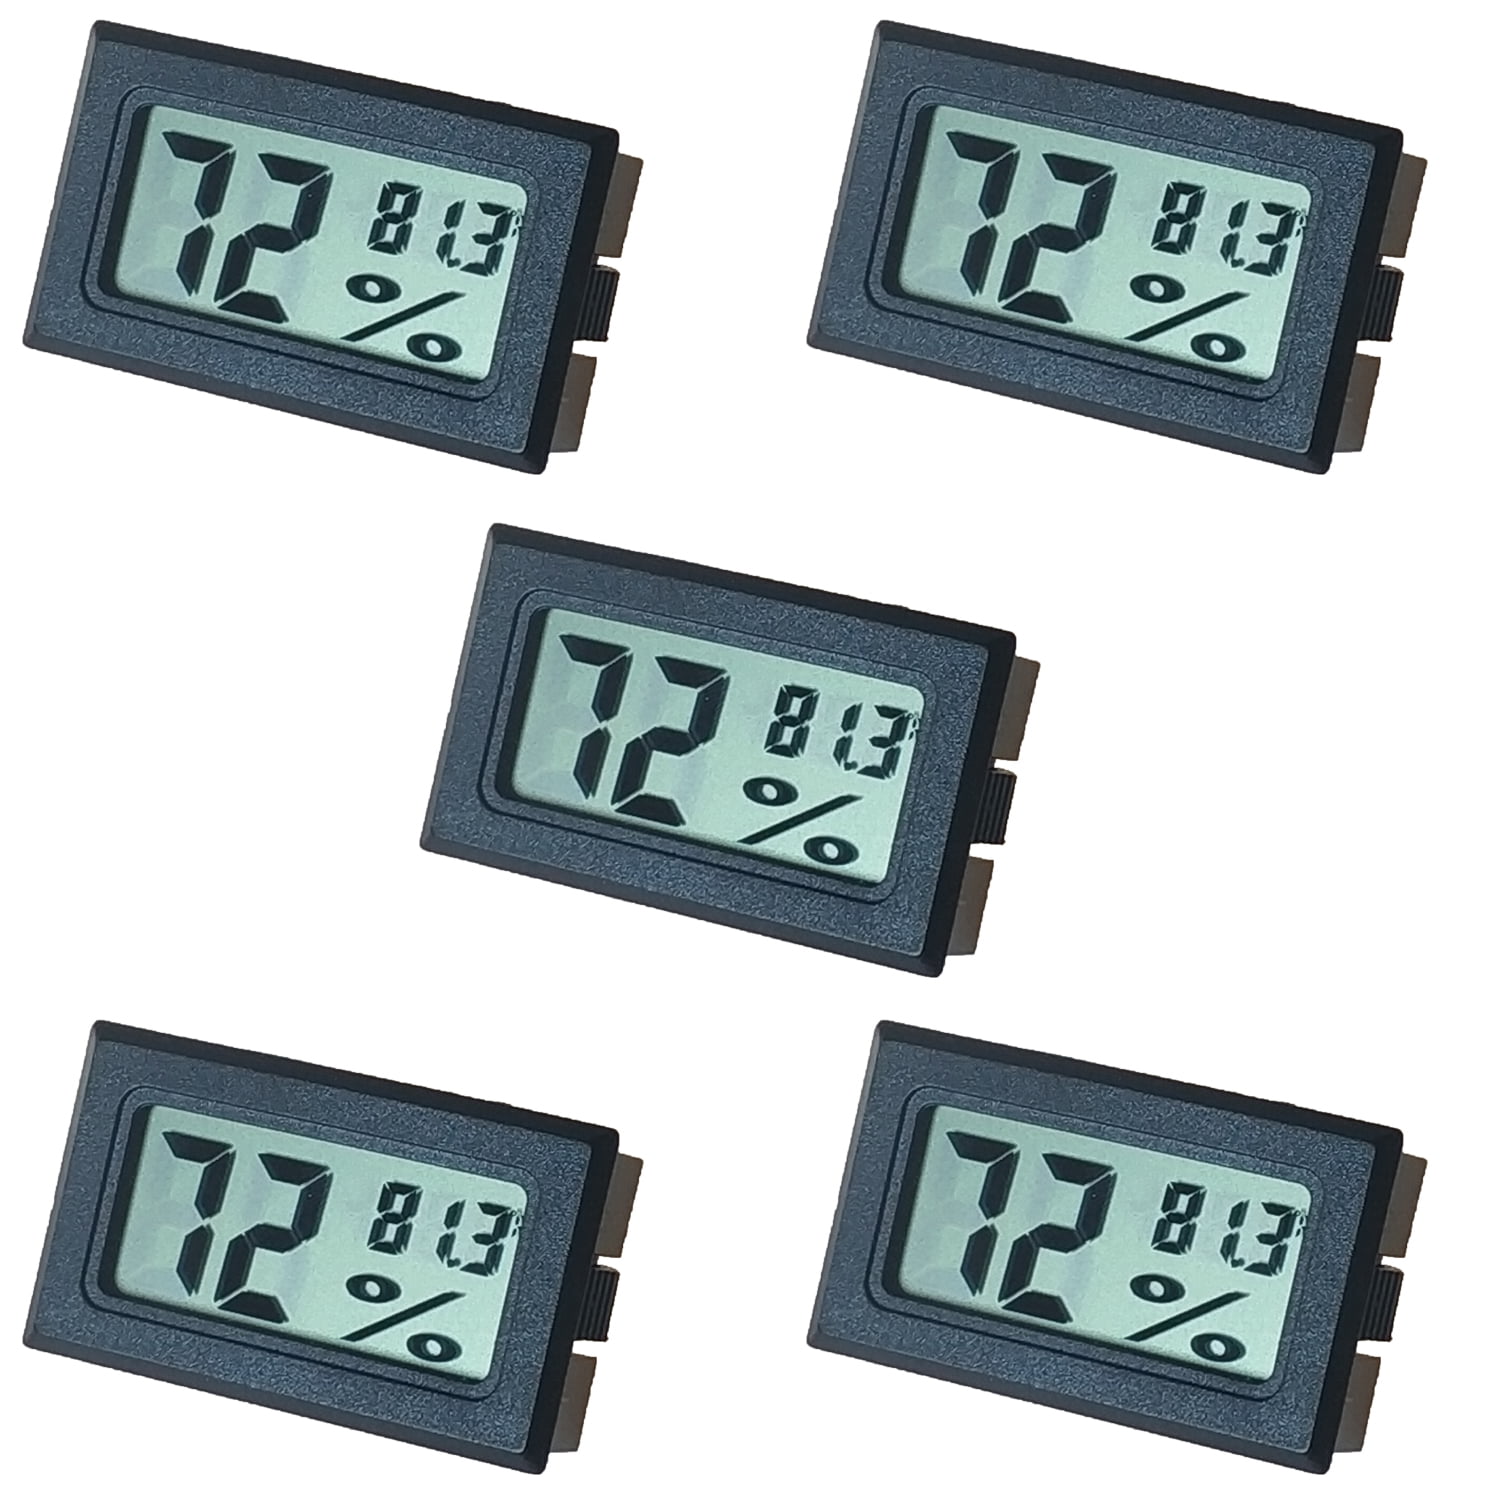 Reptile thermometer Mini Hygrometer/Temperature LCD Display Digital Fahrenheit Temperature Humidity Meter Gauge for Incubators Reptile/Humidors/Greenhouse/Garden/Cellar/Fridge/Closet and Many